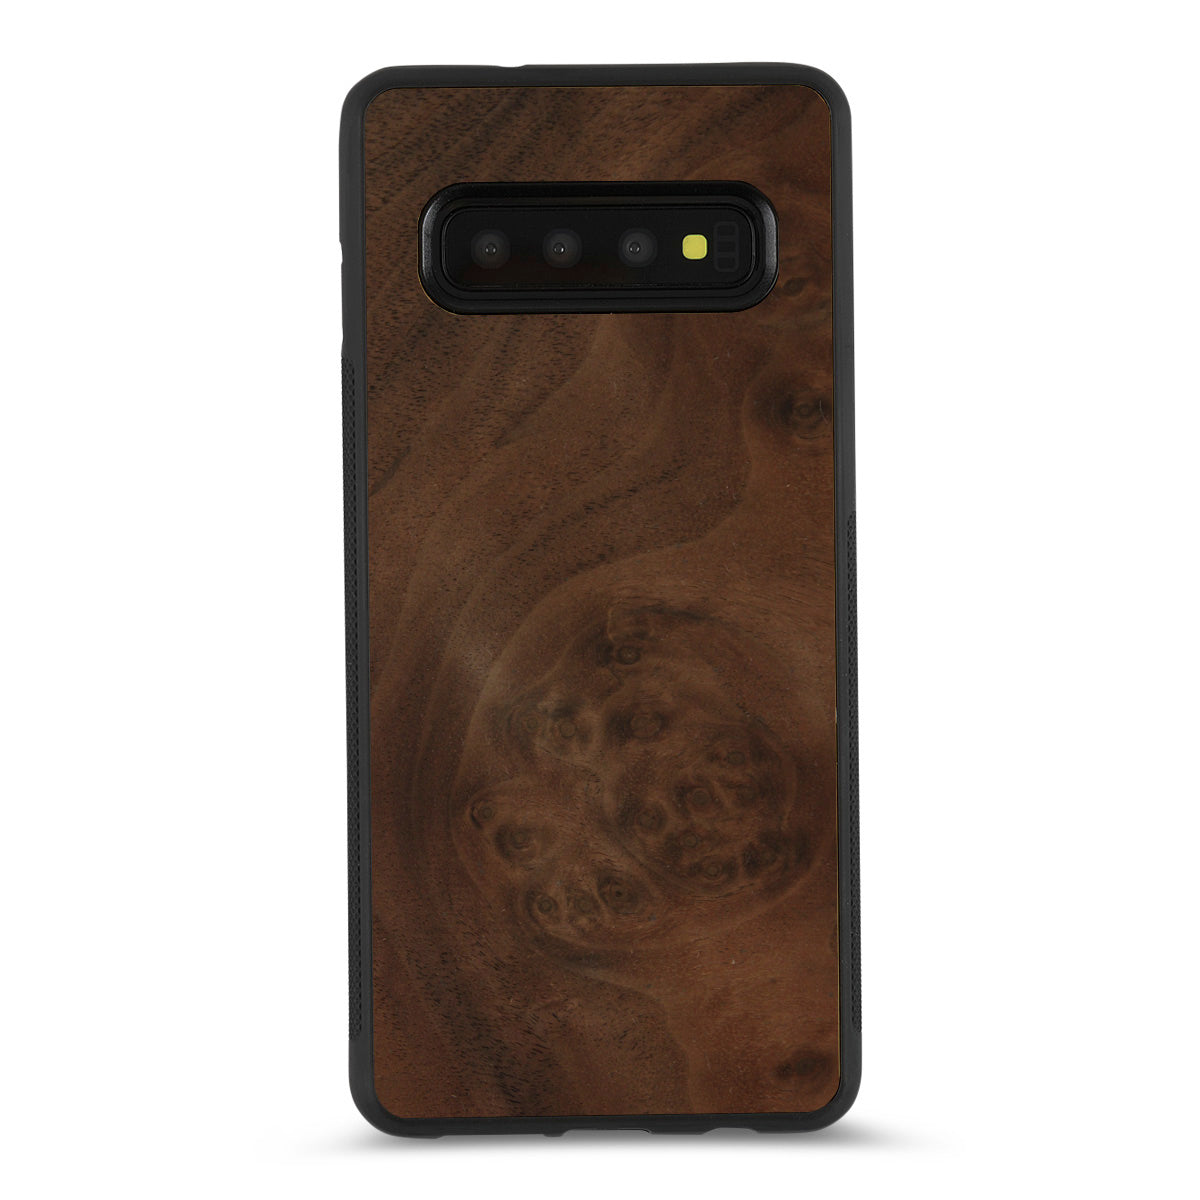 Samsung Galaxy S10e —  #WoodBack Explorer Case